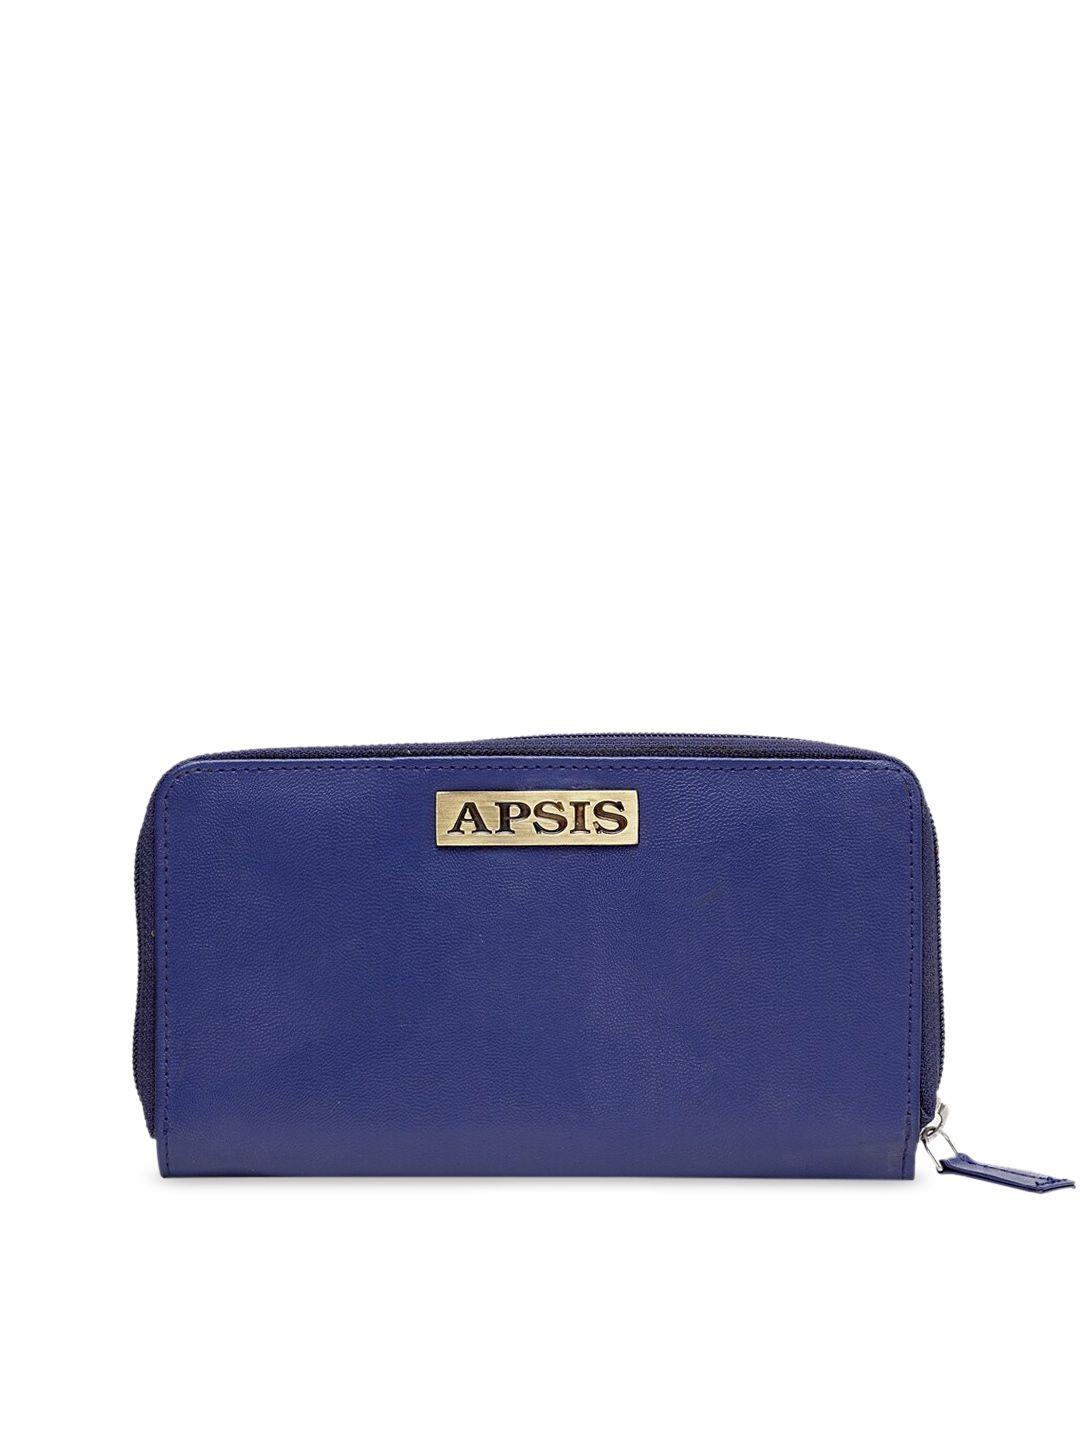 apsis women royal blue solid zip around wallet